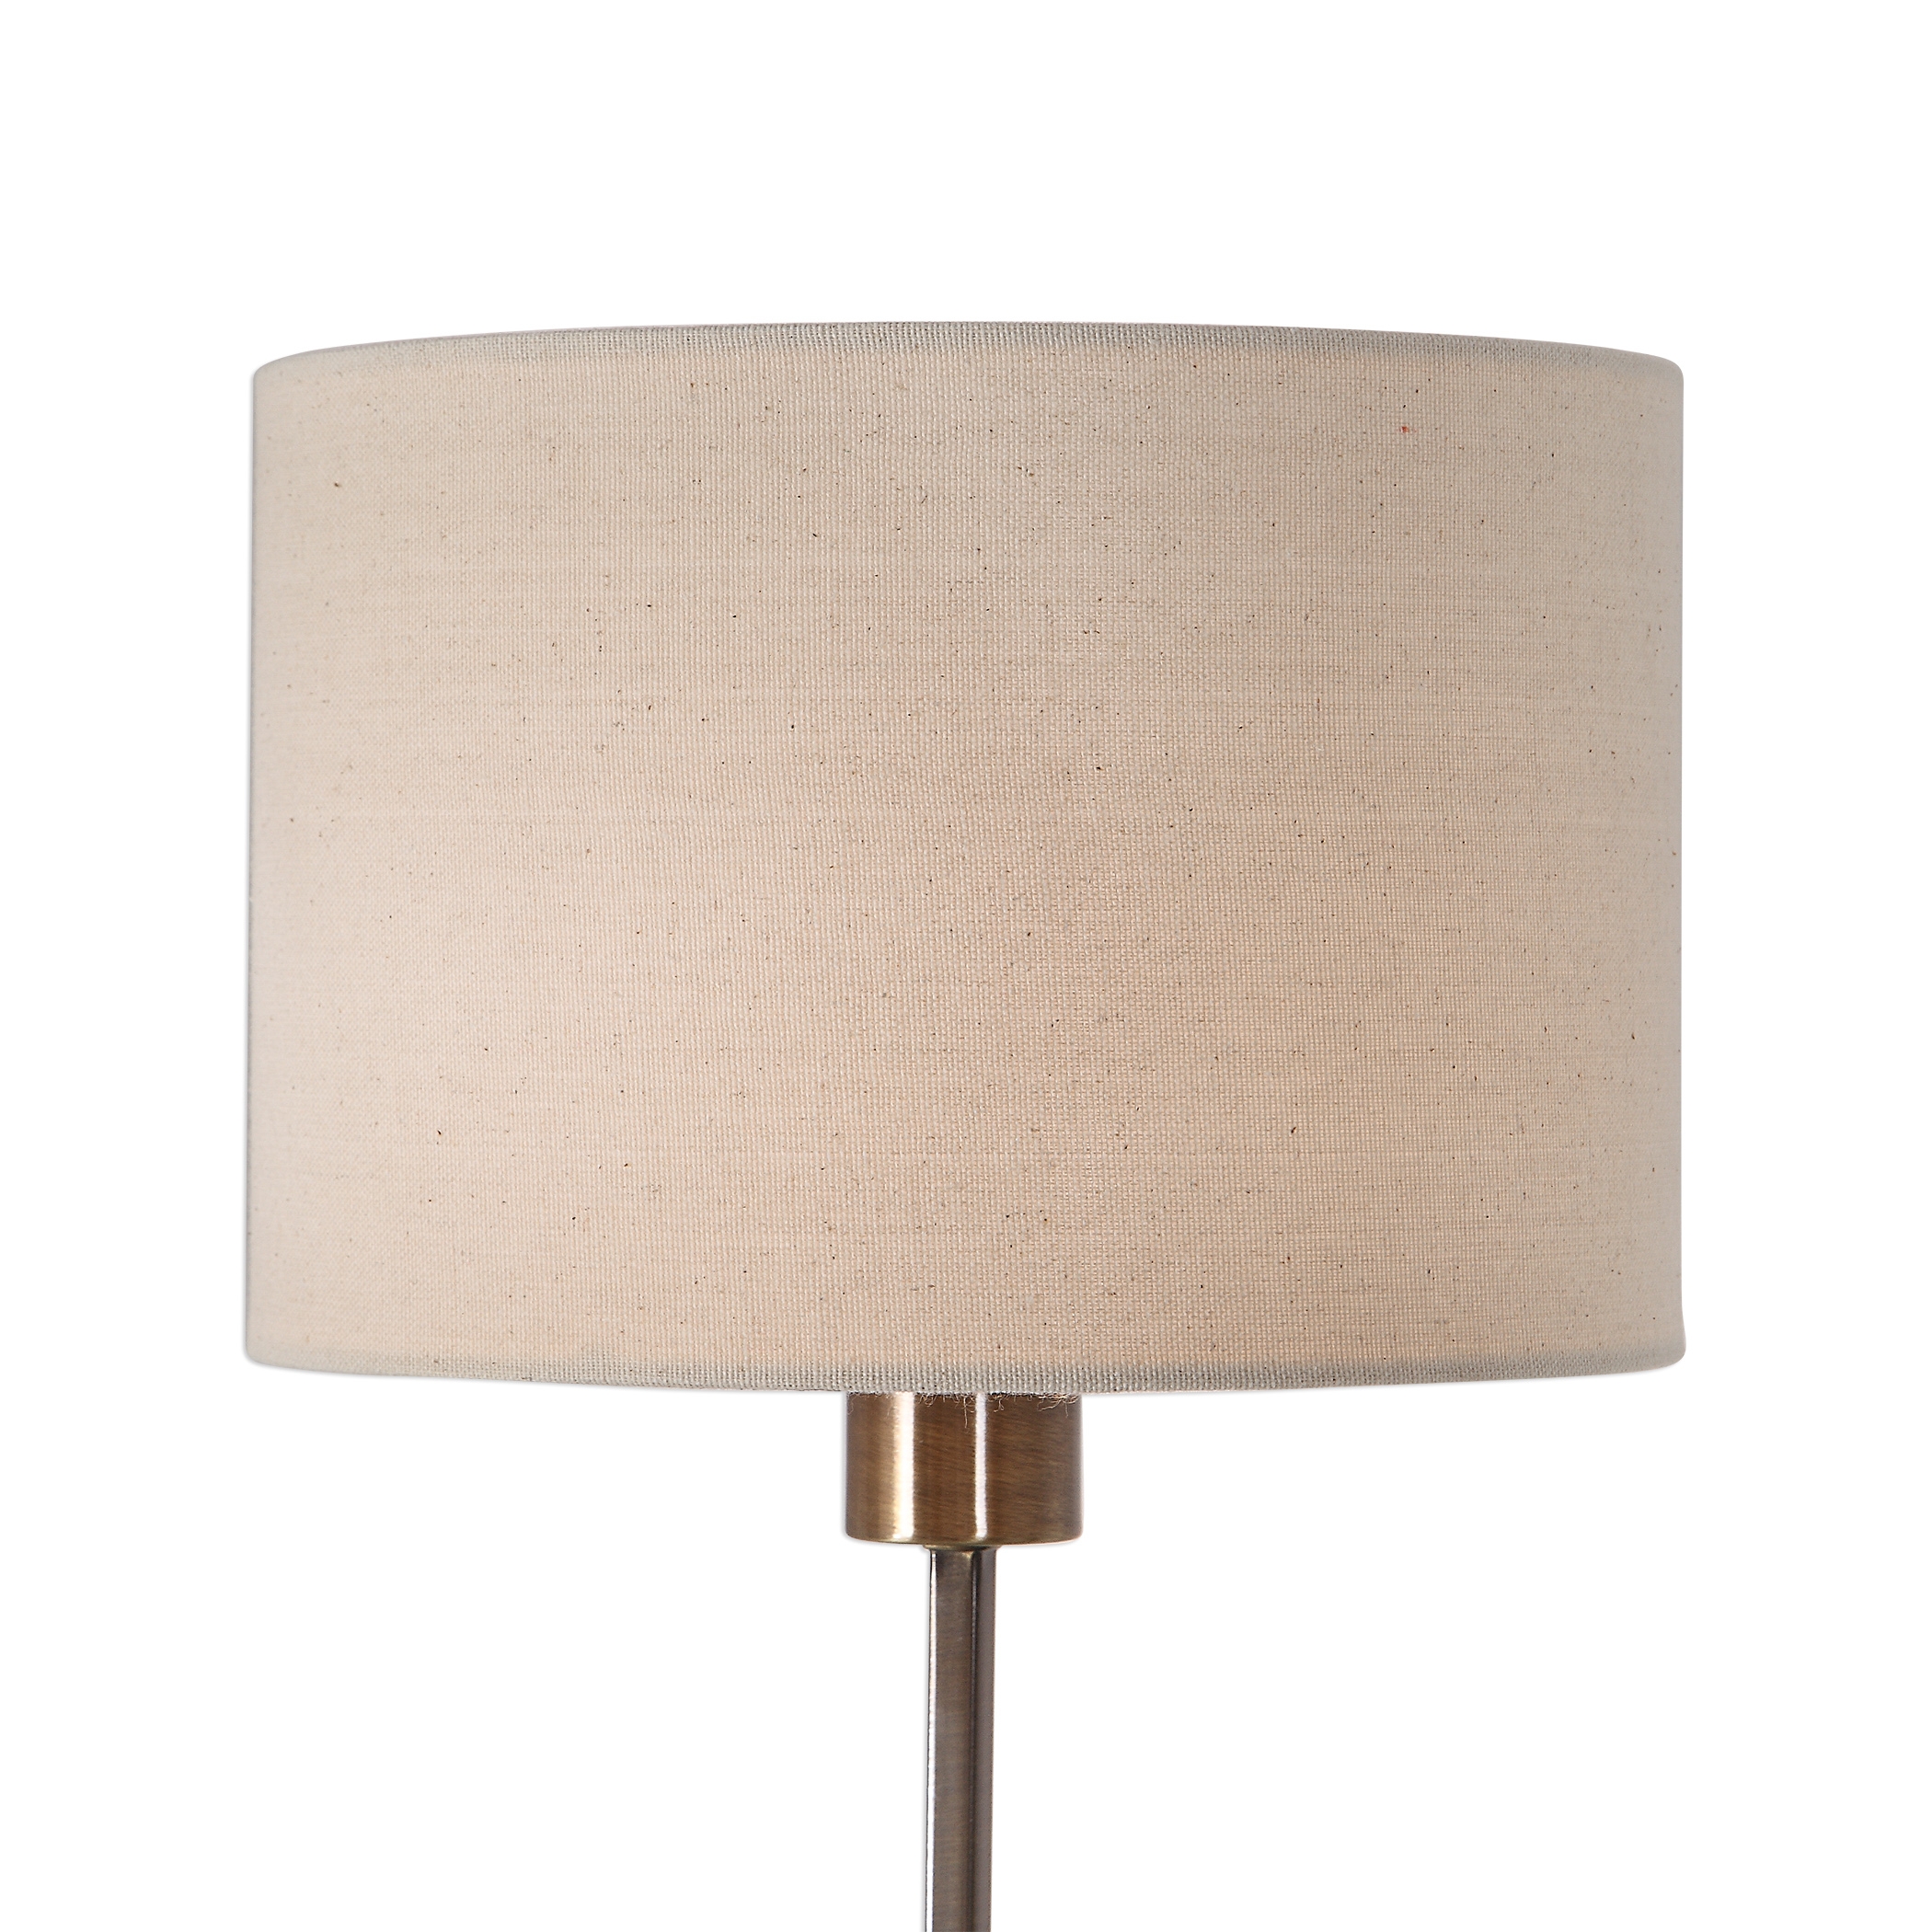 Danyon Brass Table Lamp - Image 4